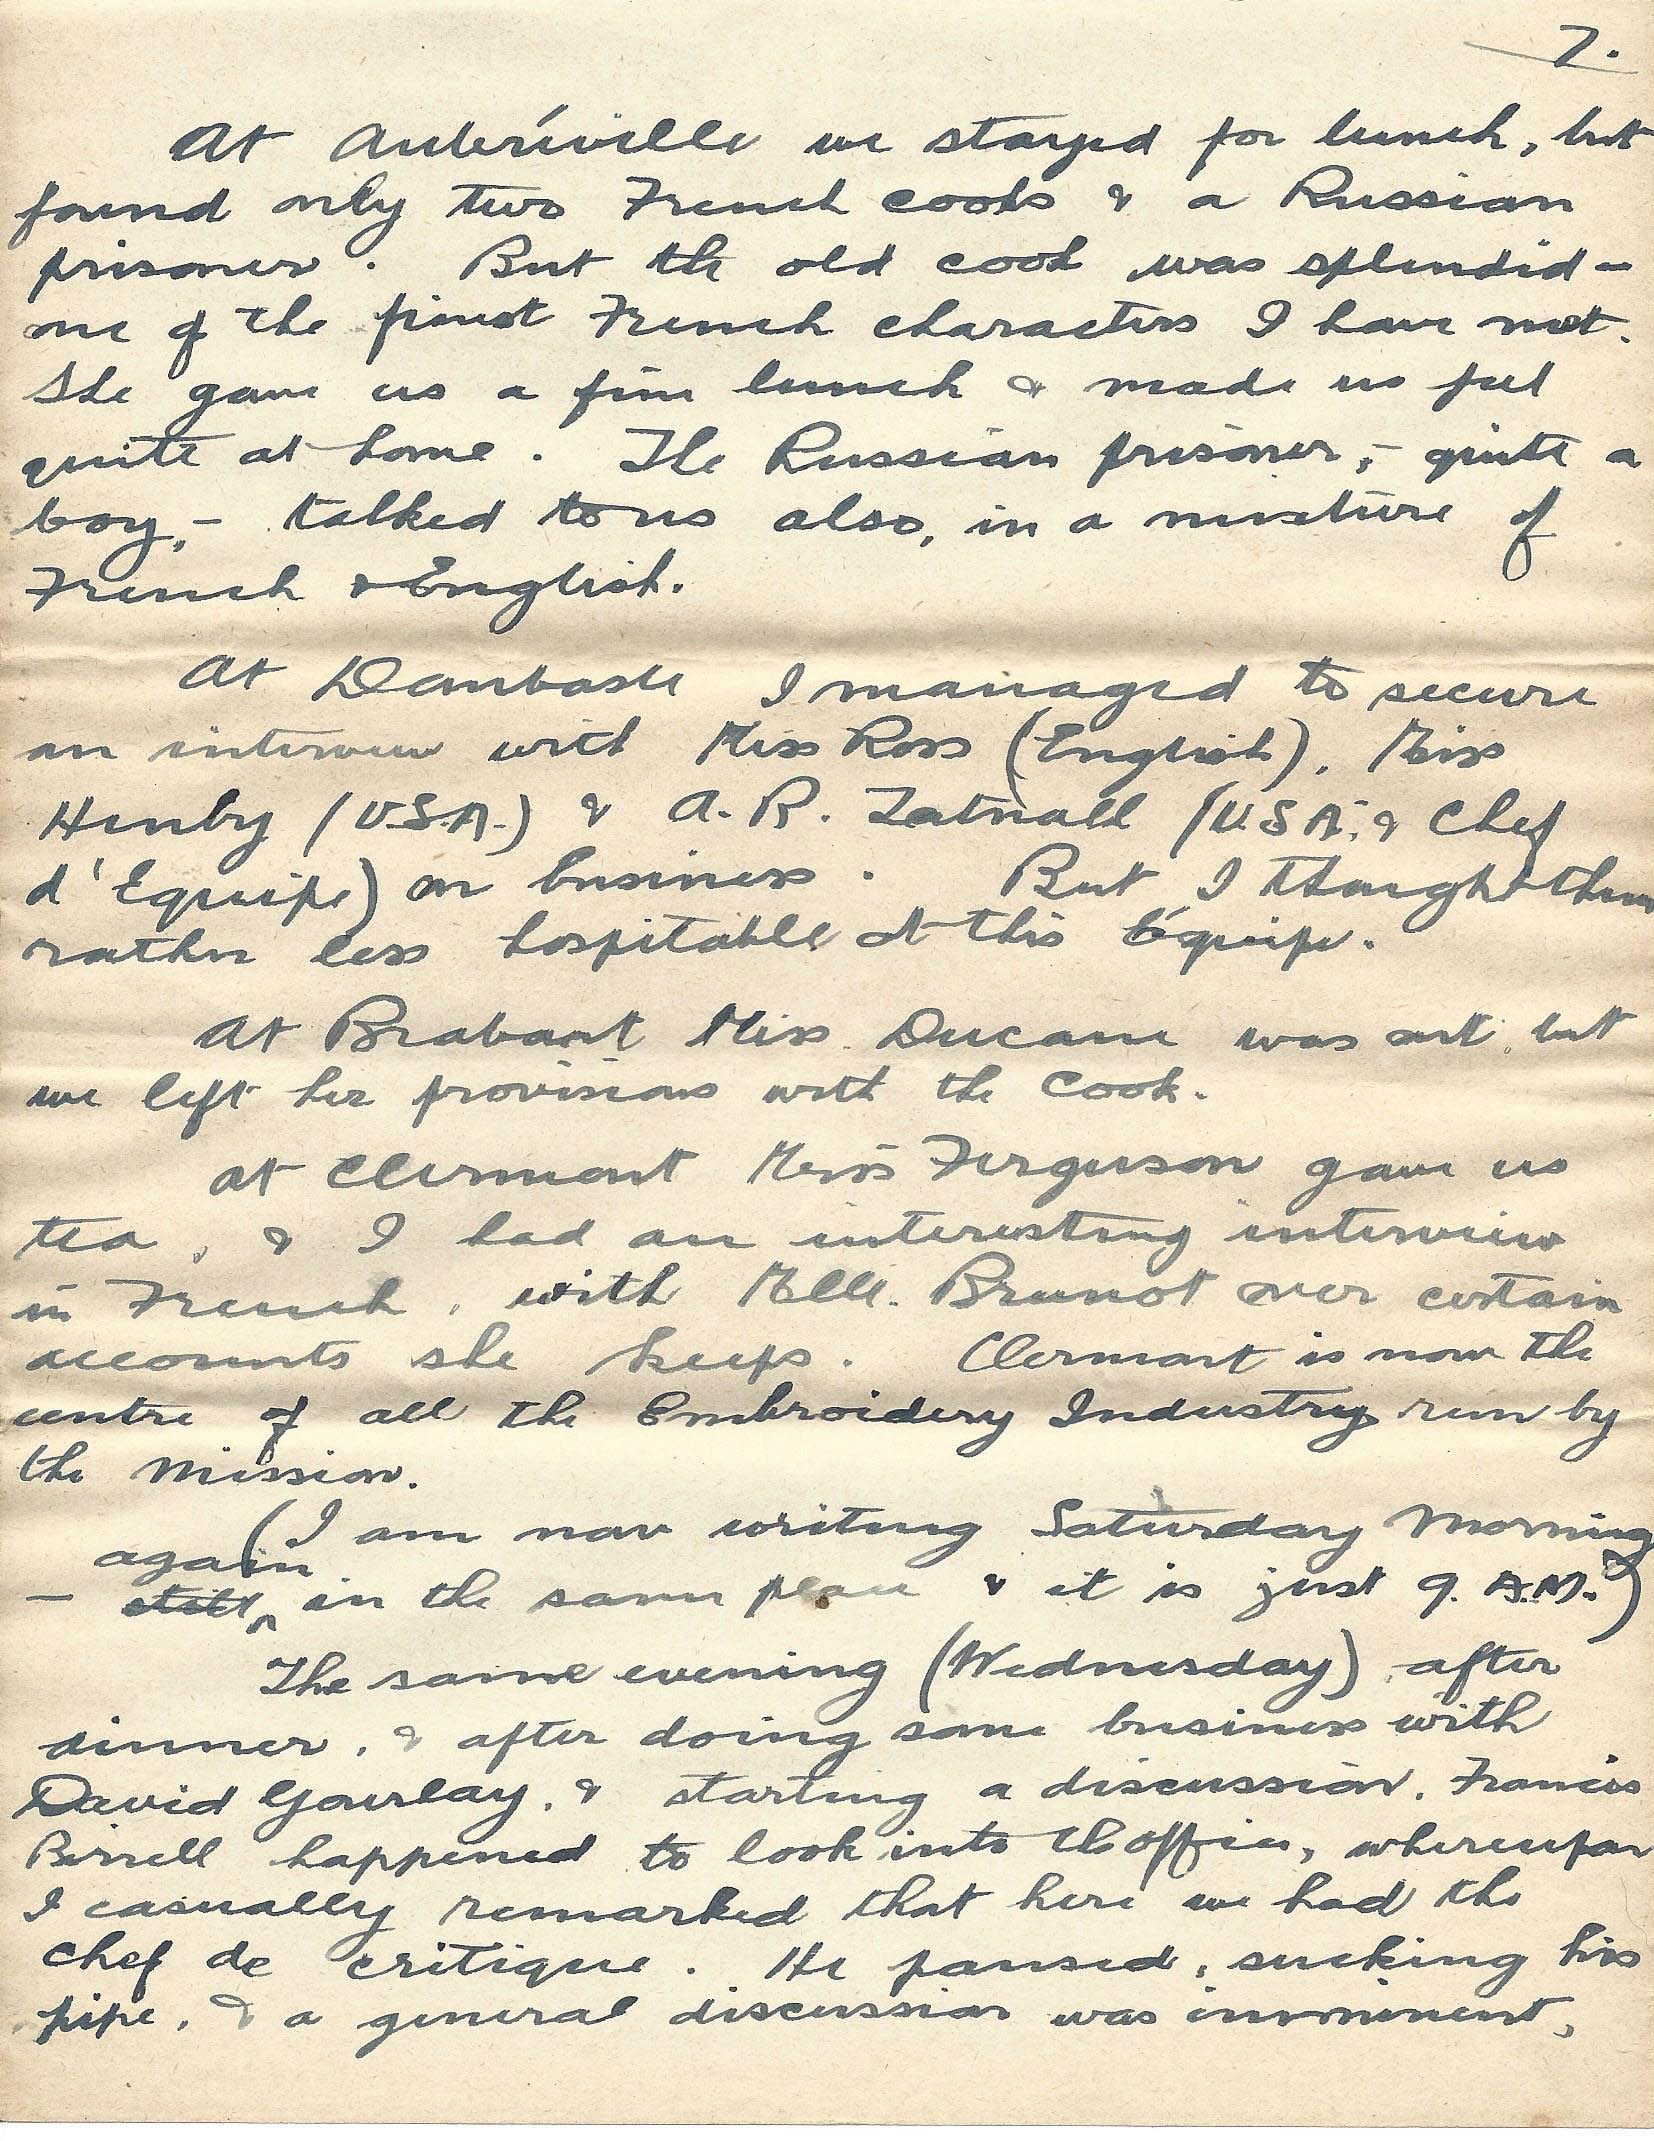 1919-11-13 p7 Donald Bearman to his father Thomas